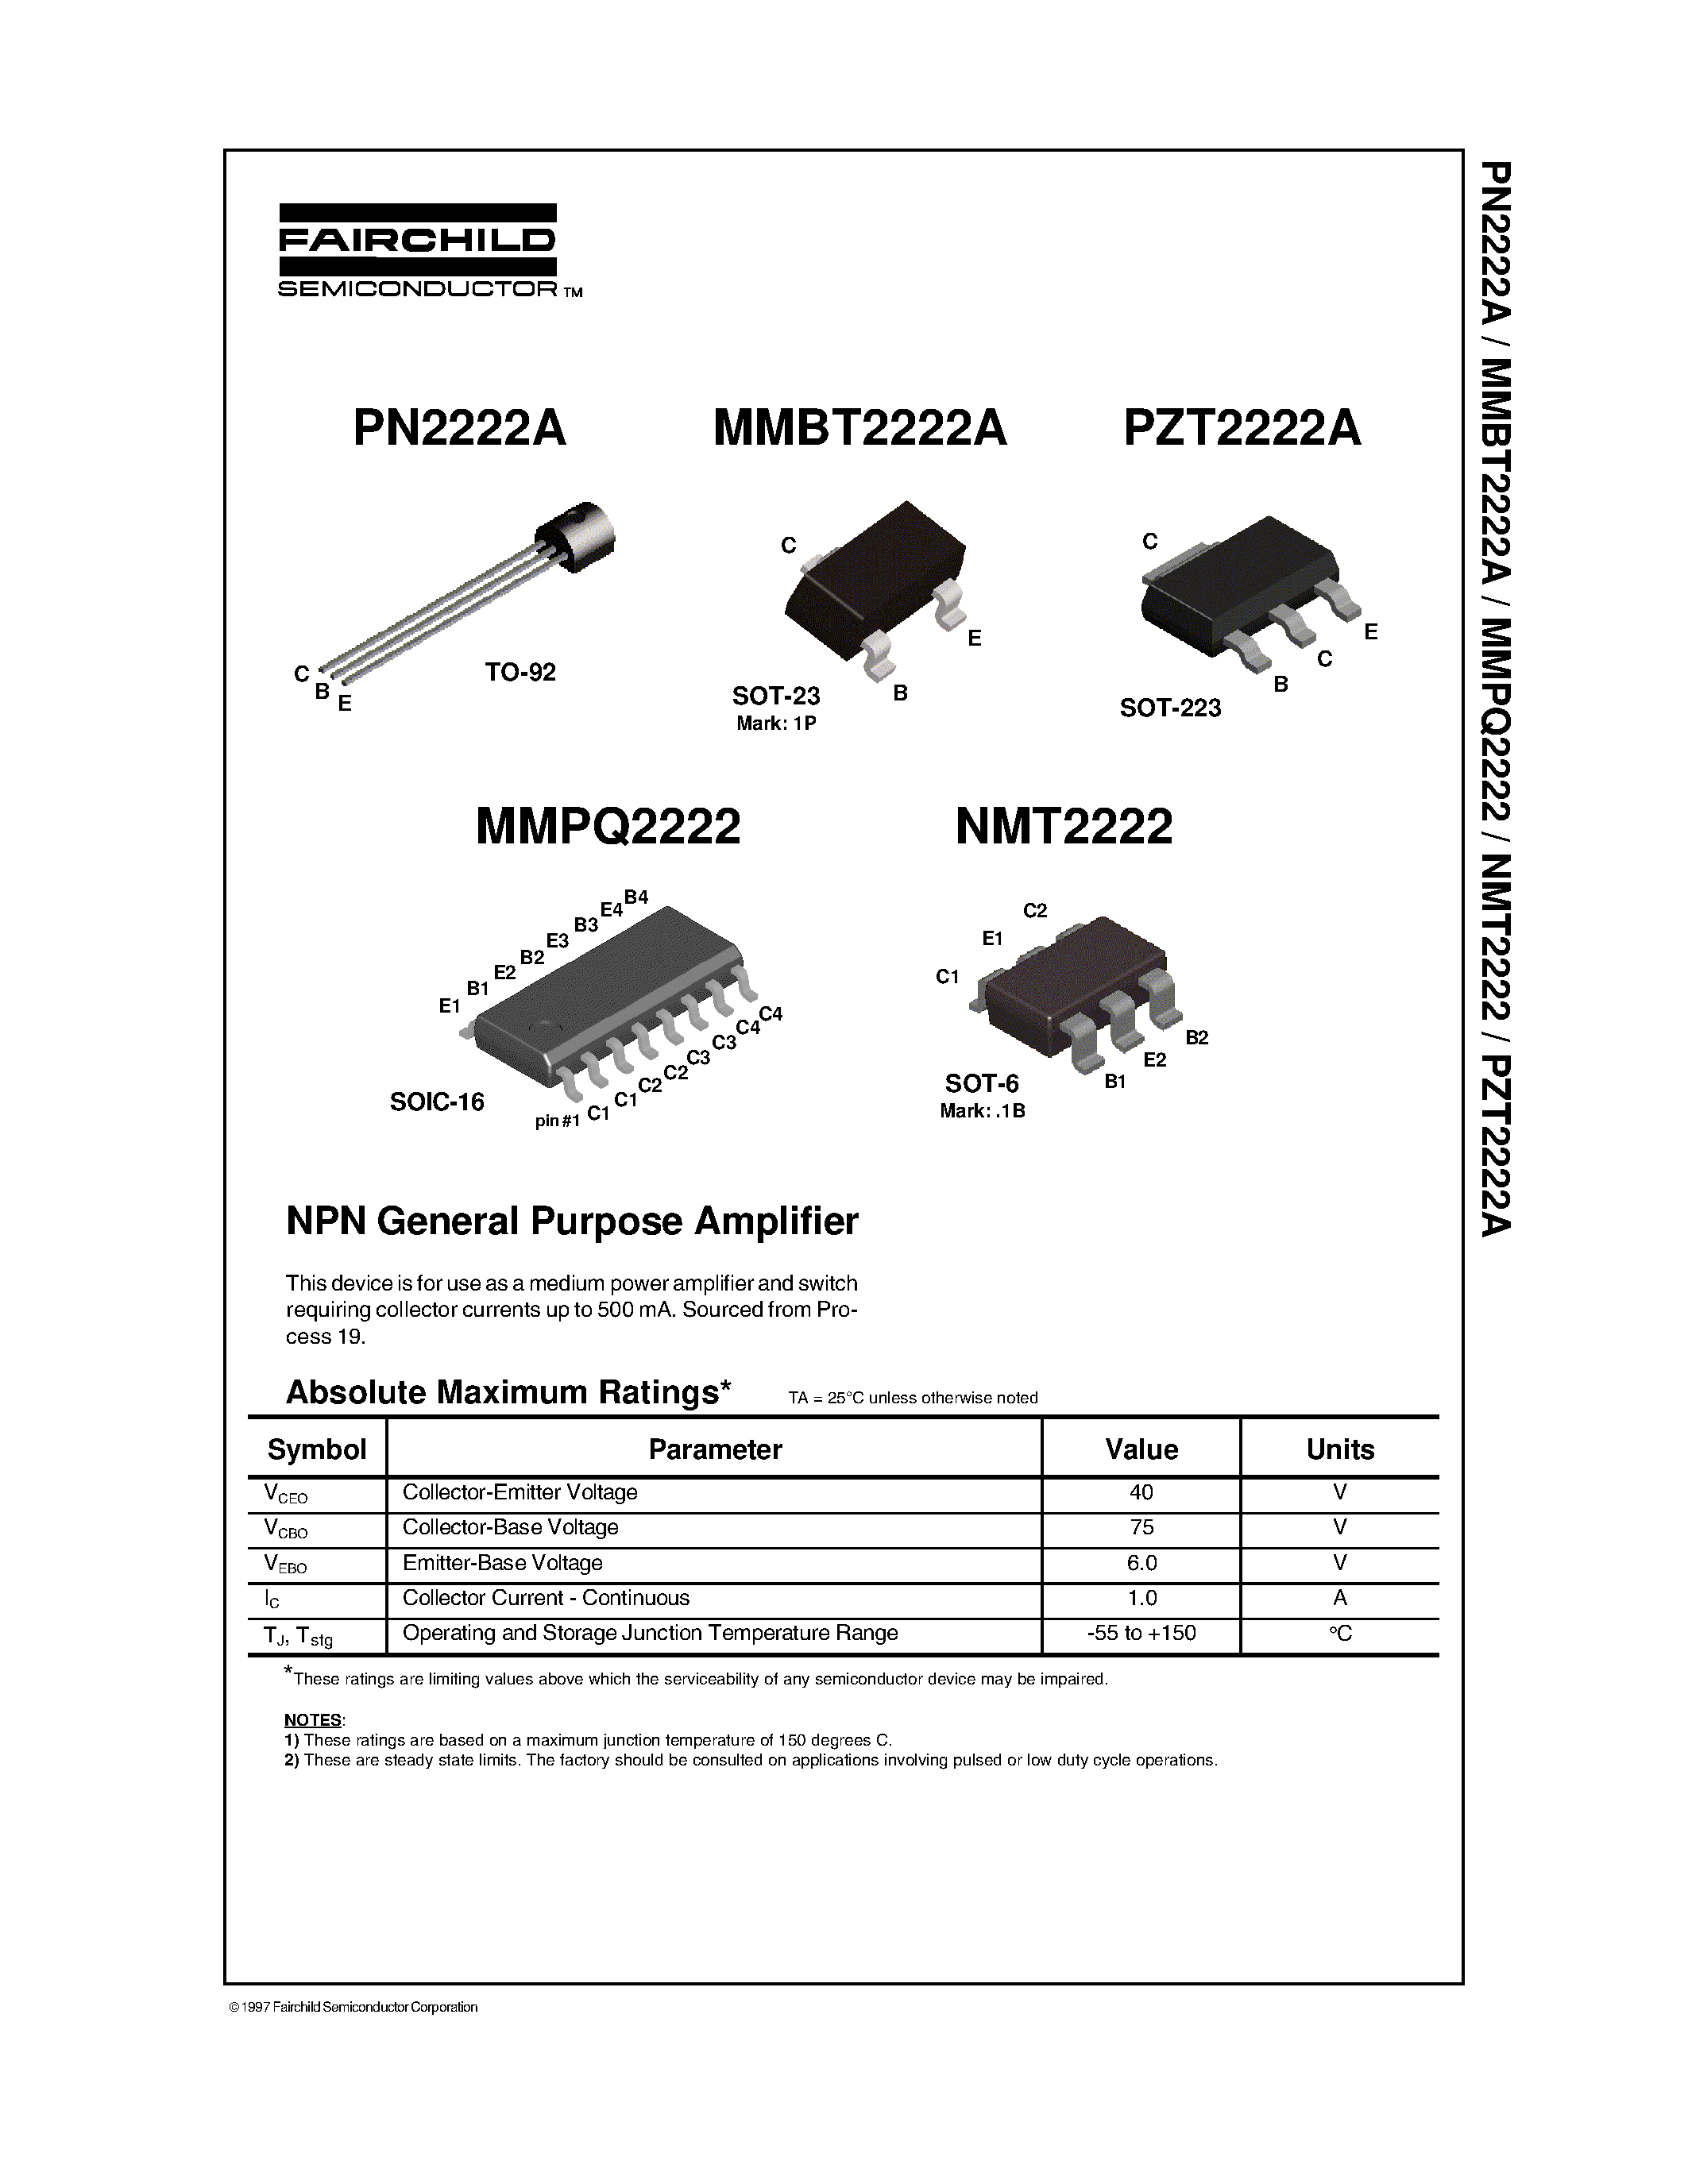 Datasheet PZT2222A - NPN General Purpose Amplifier page 1